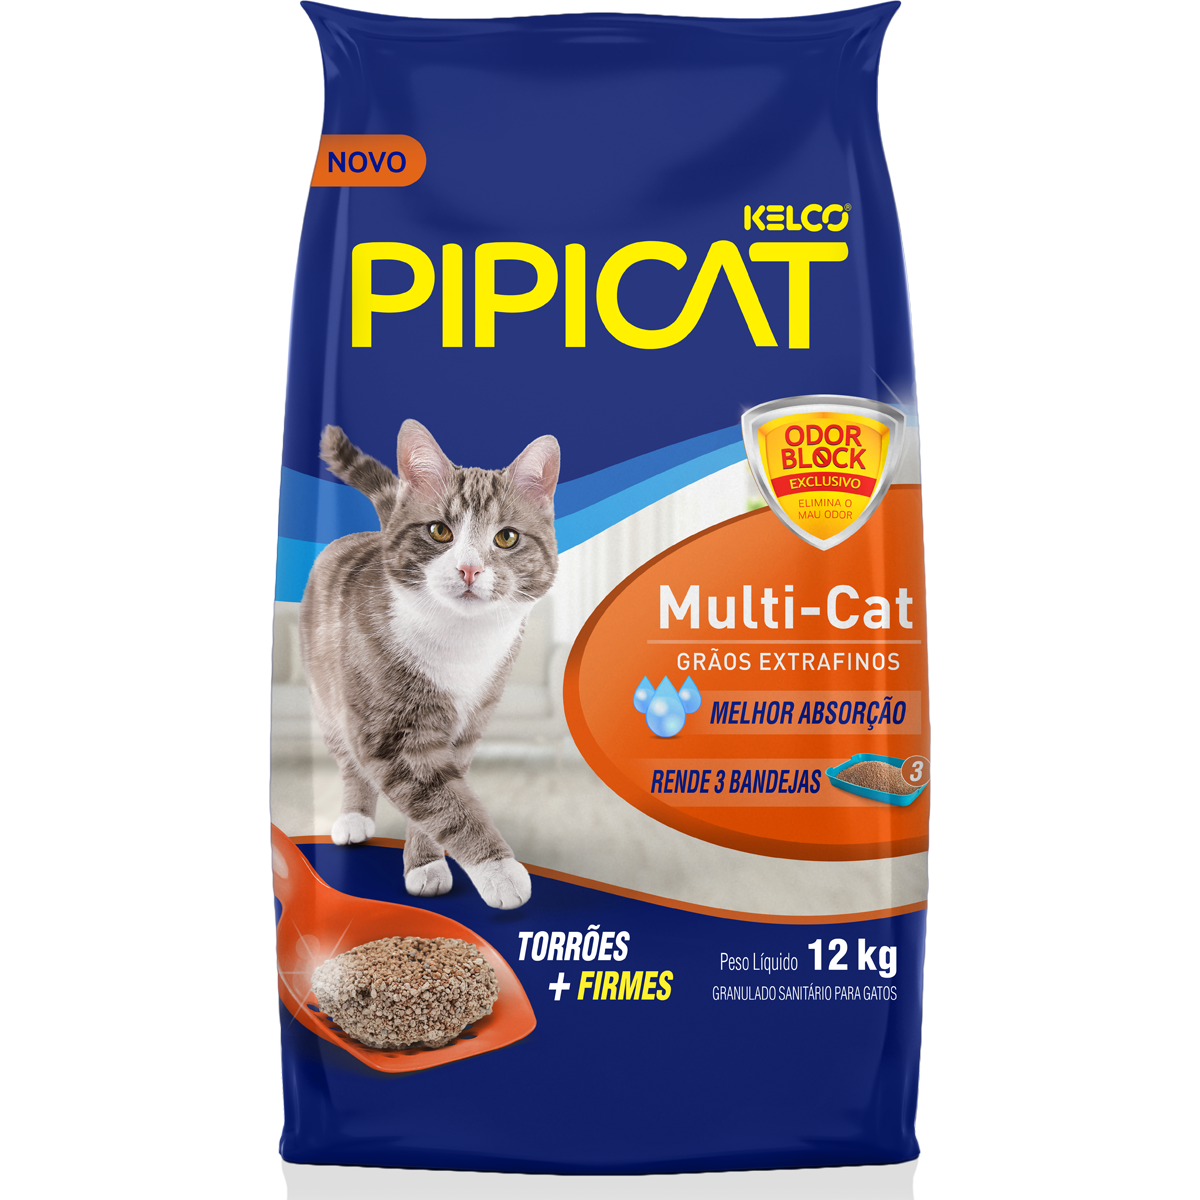 Pipicat Multi-Cat Odor Block 12kg